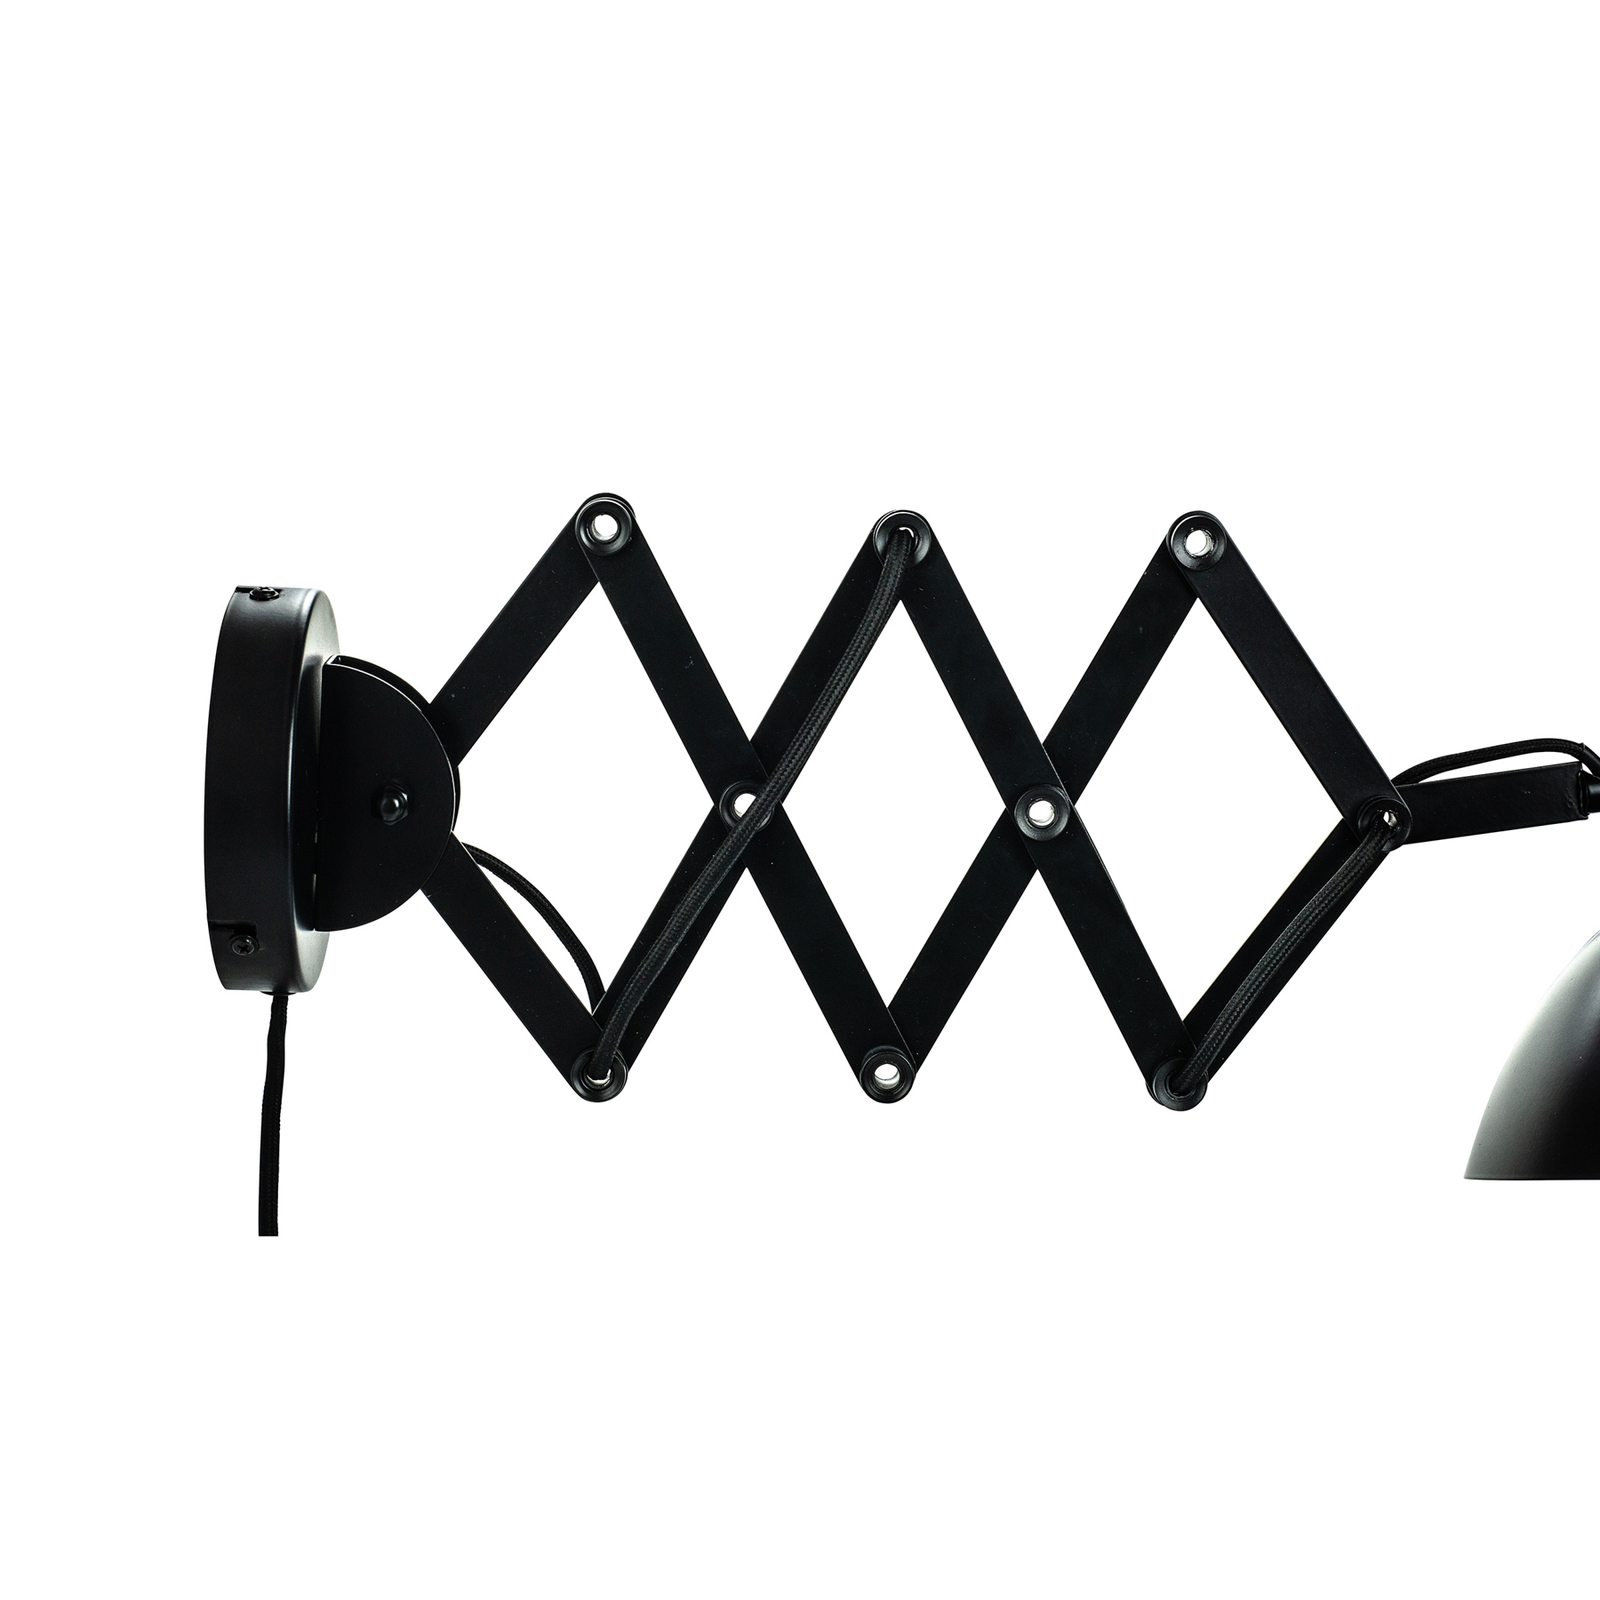 Dyberg Larsen Futura wall lamp with a scissors arm